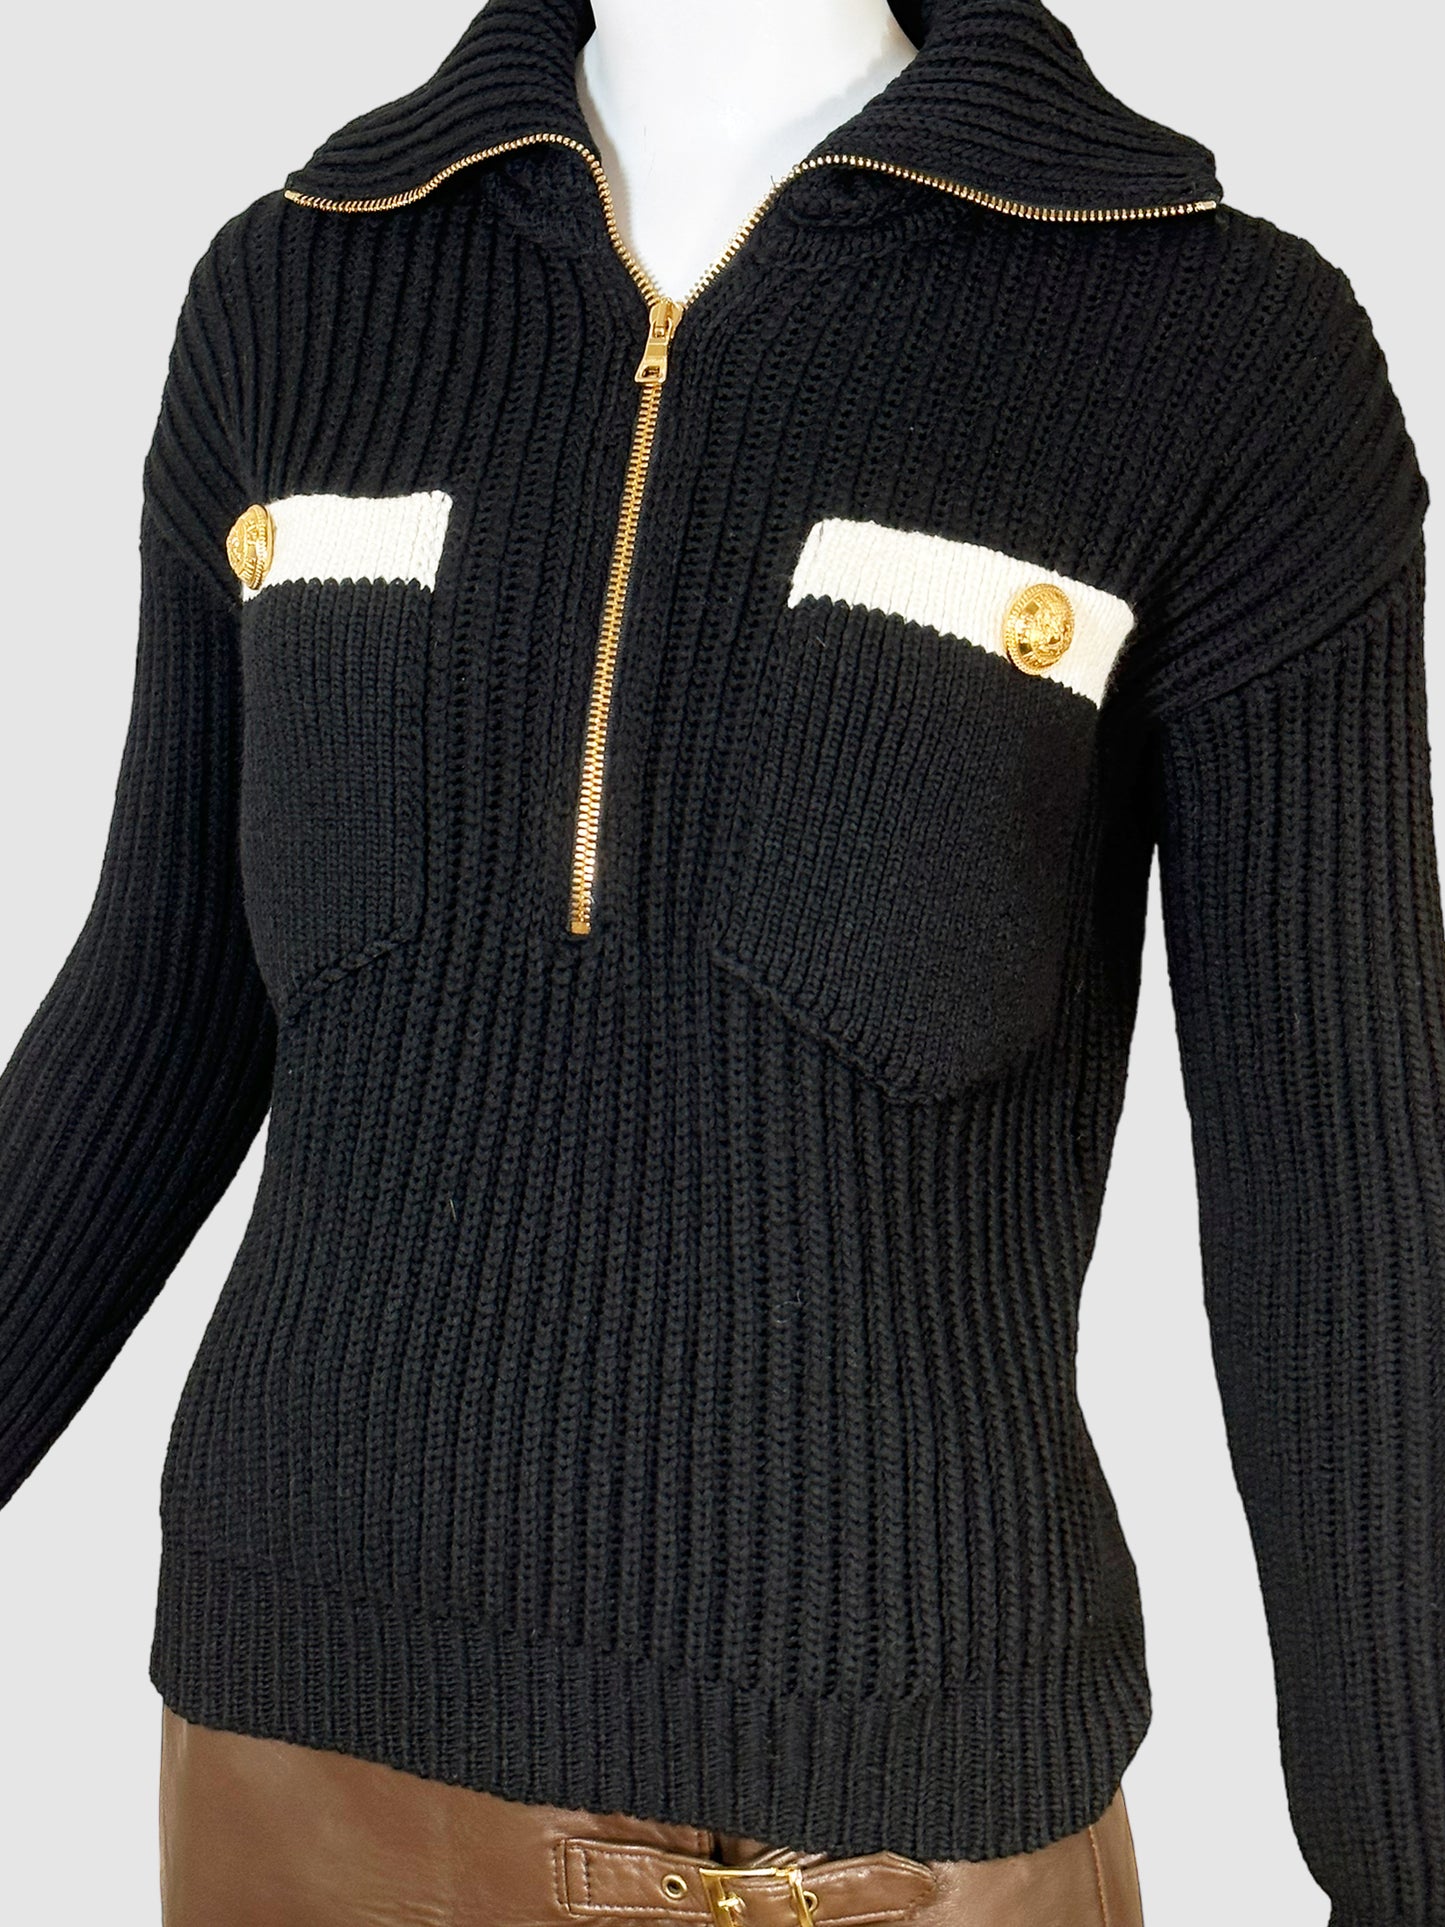 Balmain Knitted Half-Zip Sweater - Size 34(2)